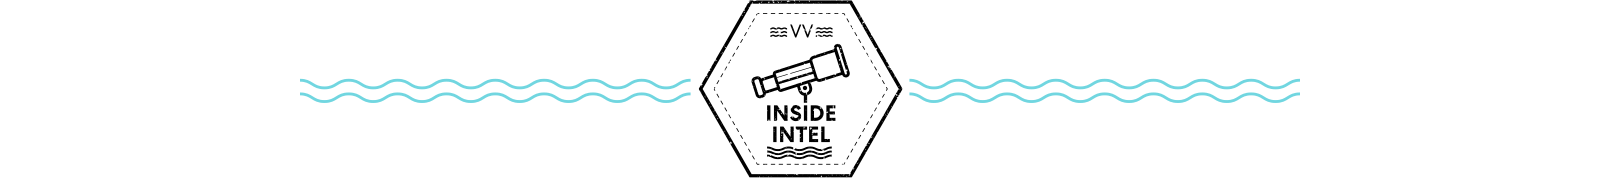 Inside Intel Stamp